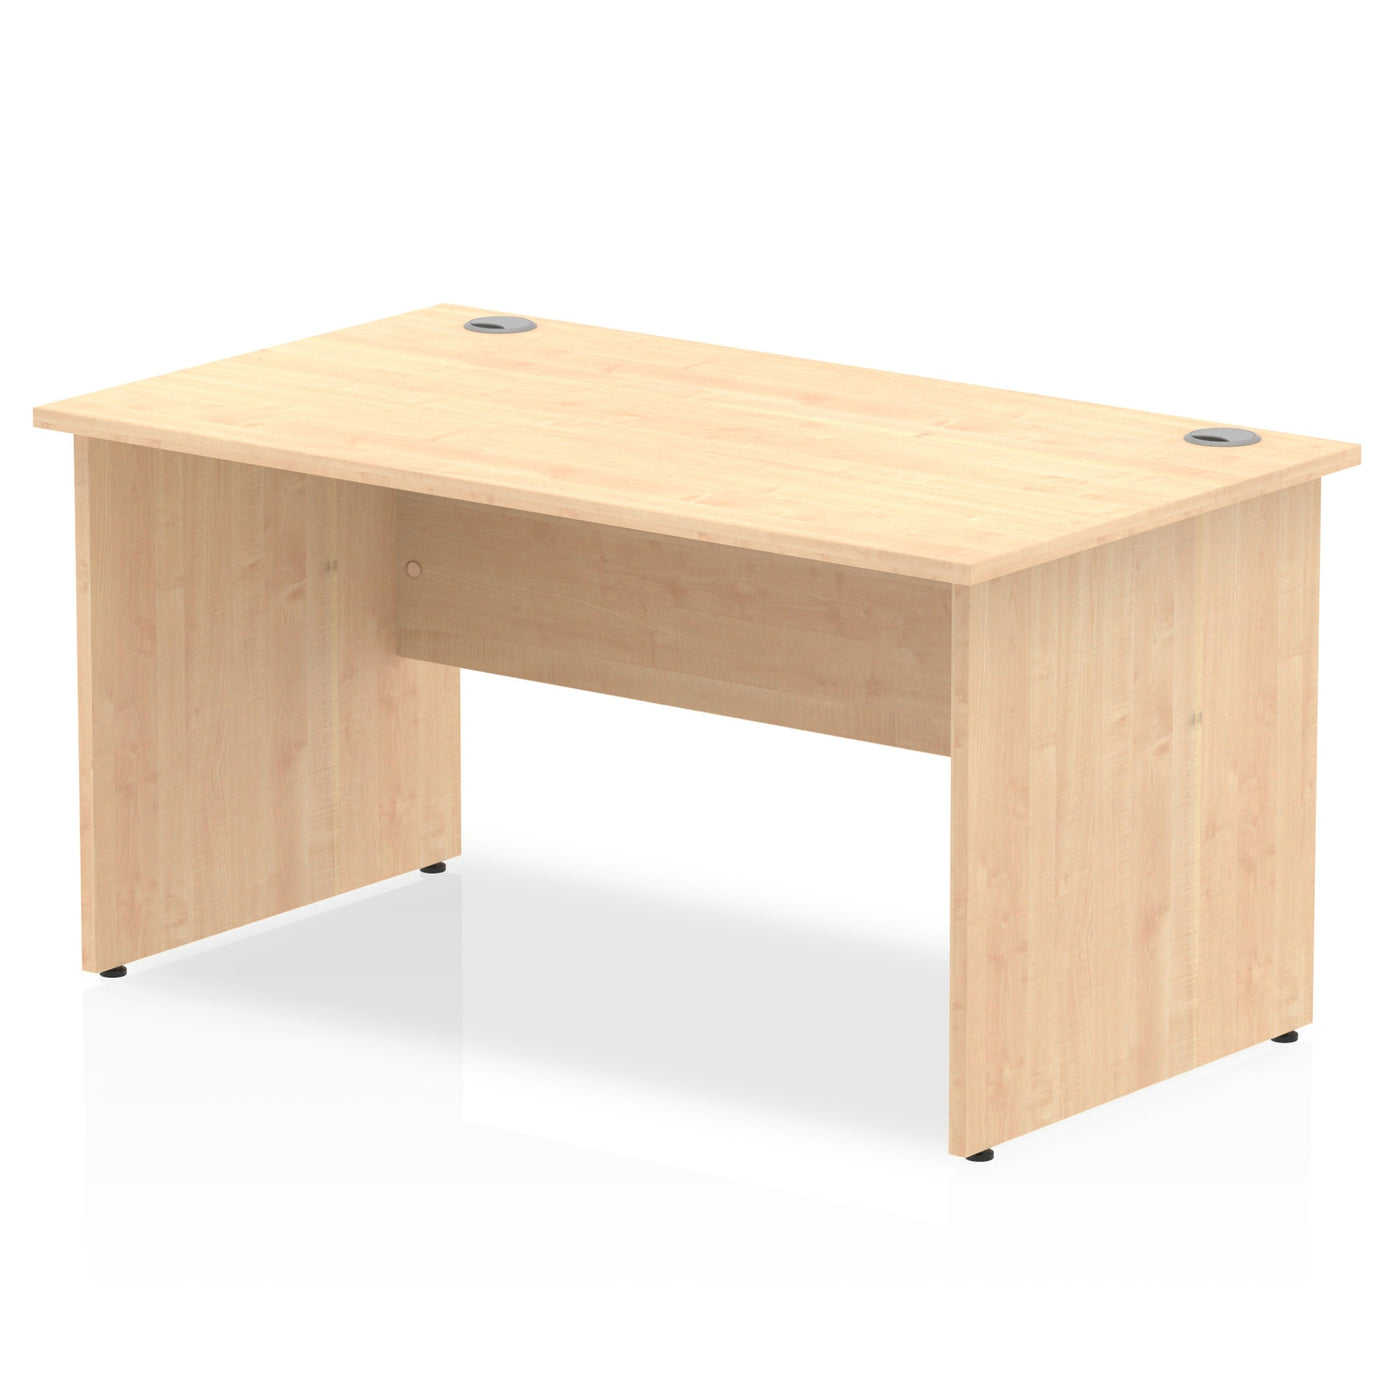 Impulse 1400mm Home Office Desk | Panel End Desk | Home Office Furniture | Homework Desk | Work From Home Desk | Wooden Desk